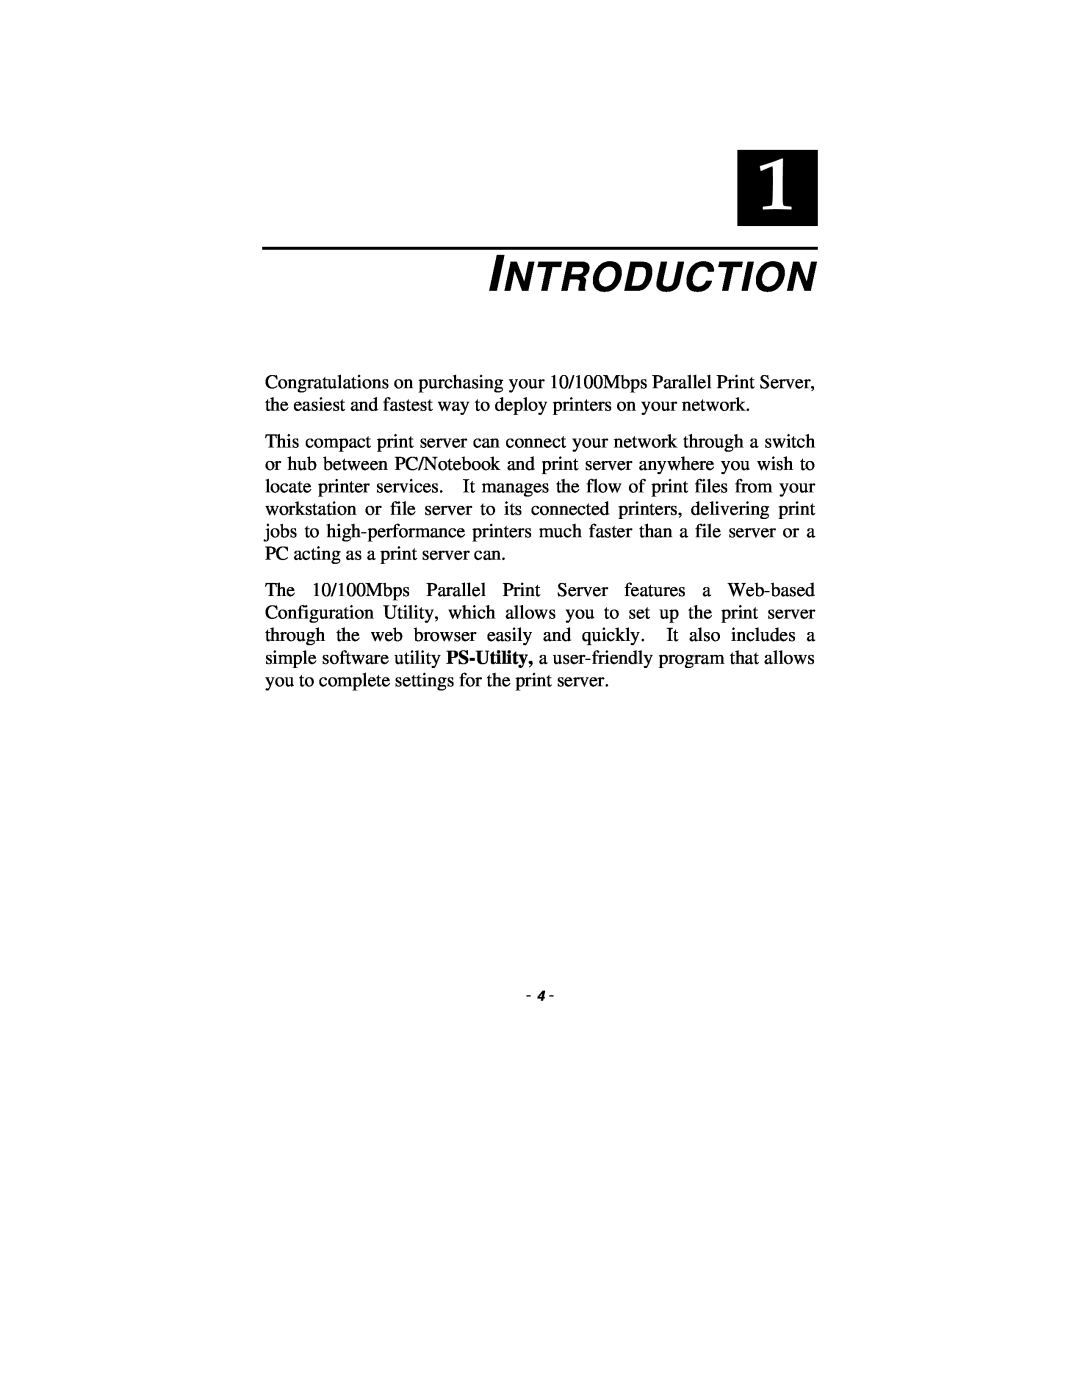 TRENDnet TE100-P1P manual Introduction 